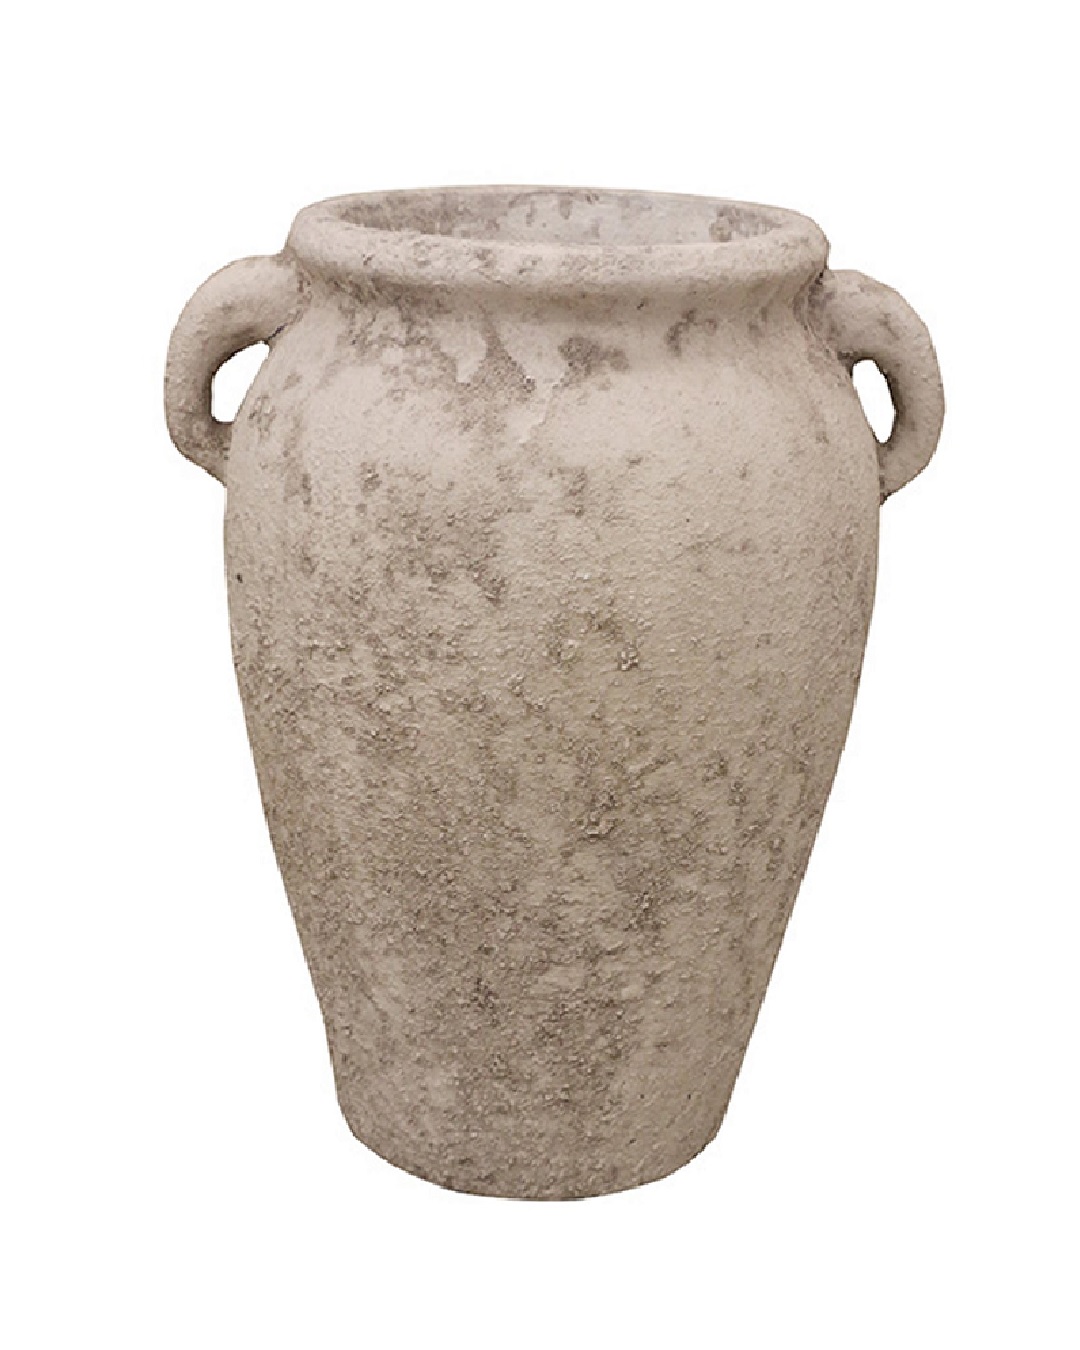 Tuscan style urn